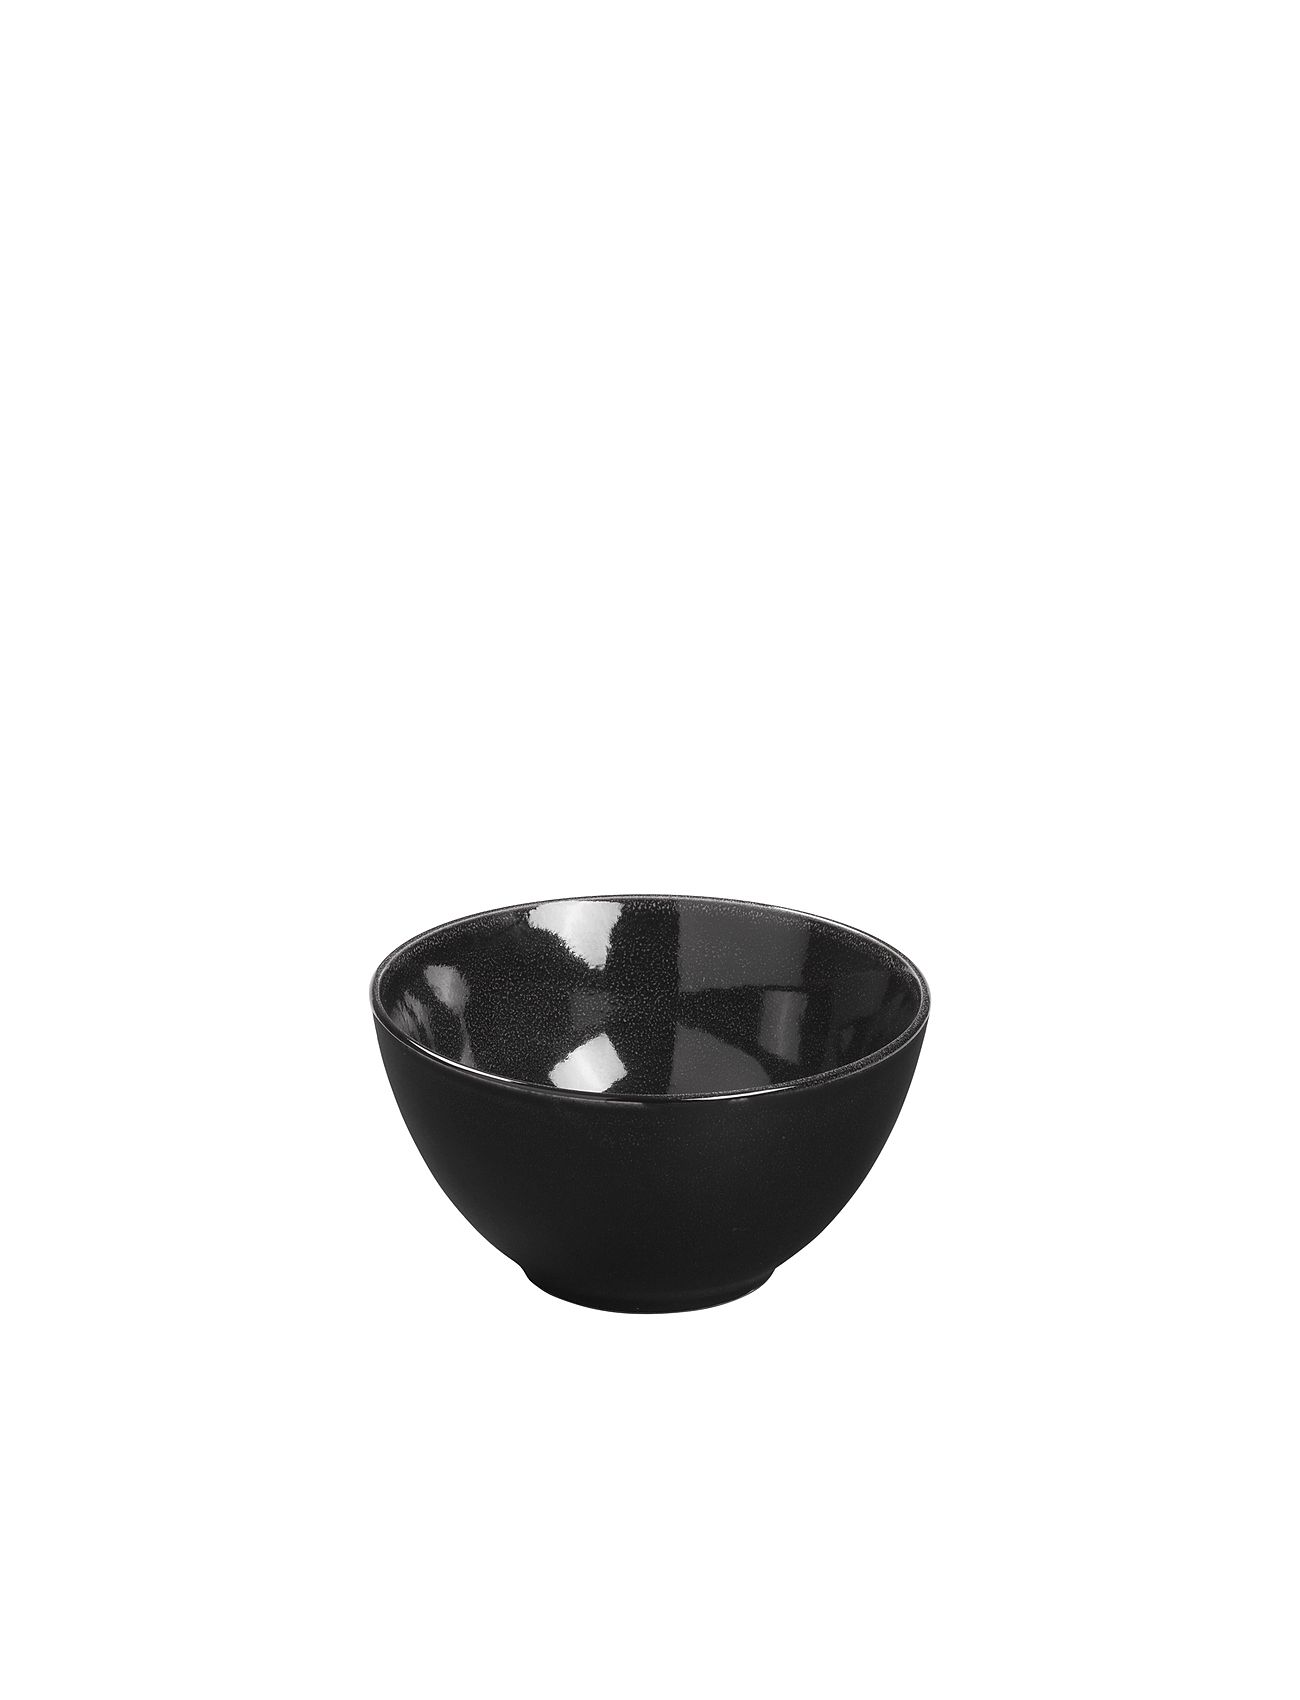 Skål 'Nordic Coal' Stentøj Home Tableware Bowls Breakfast Bowls Black Broste Copenhagen